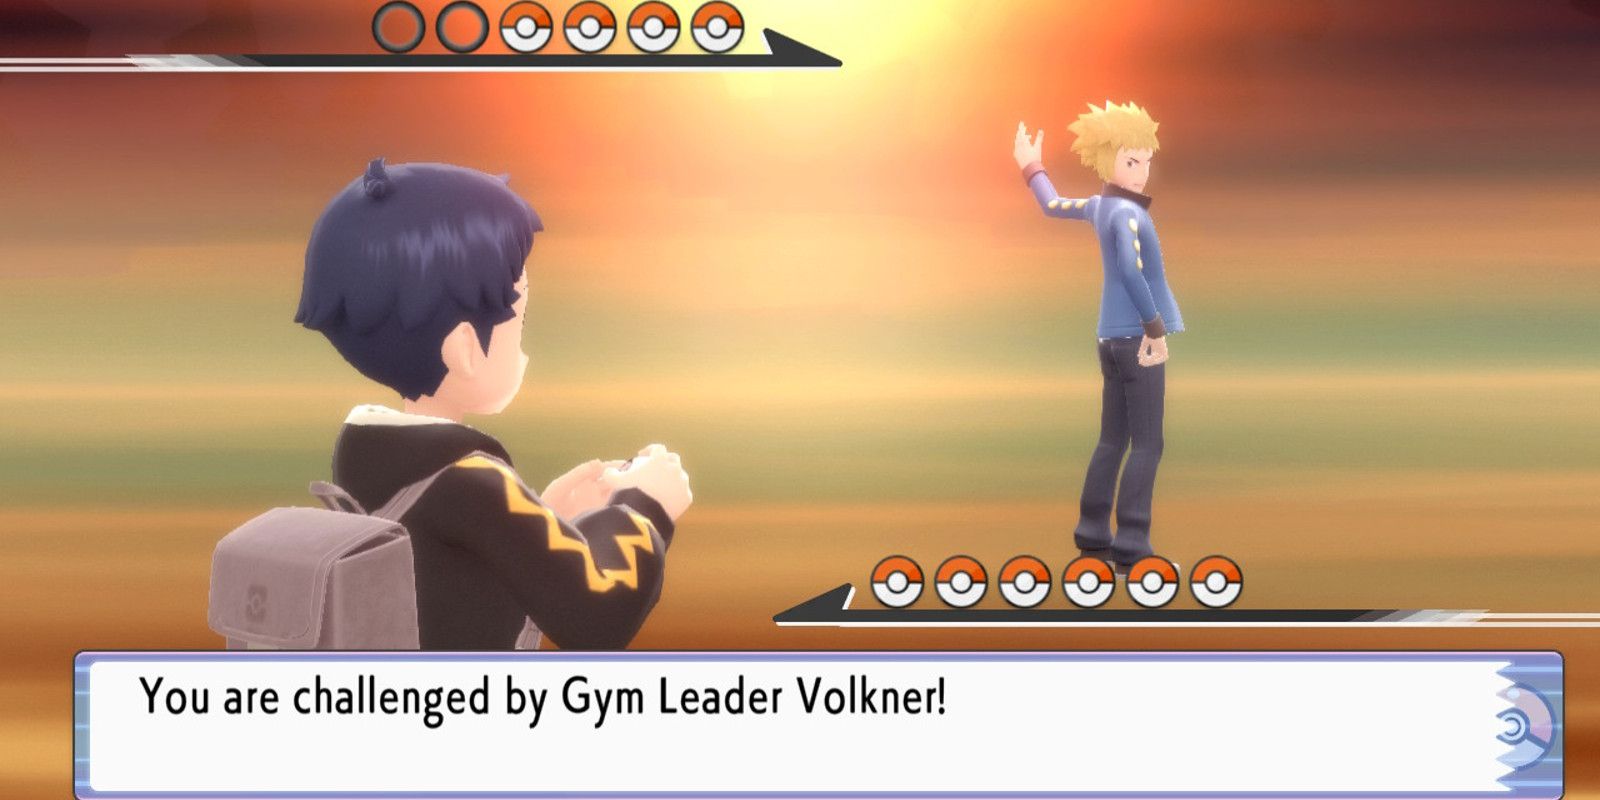 Volkner battles a player in Pokemon.